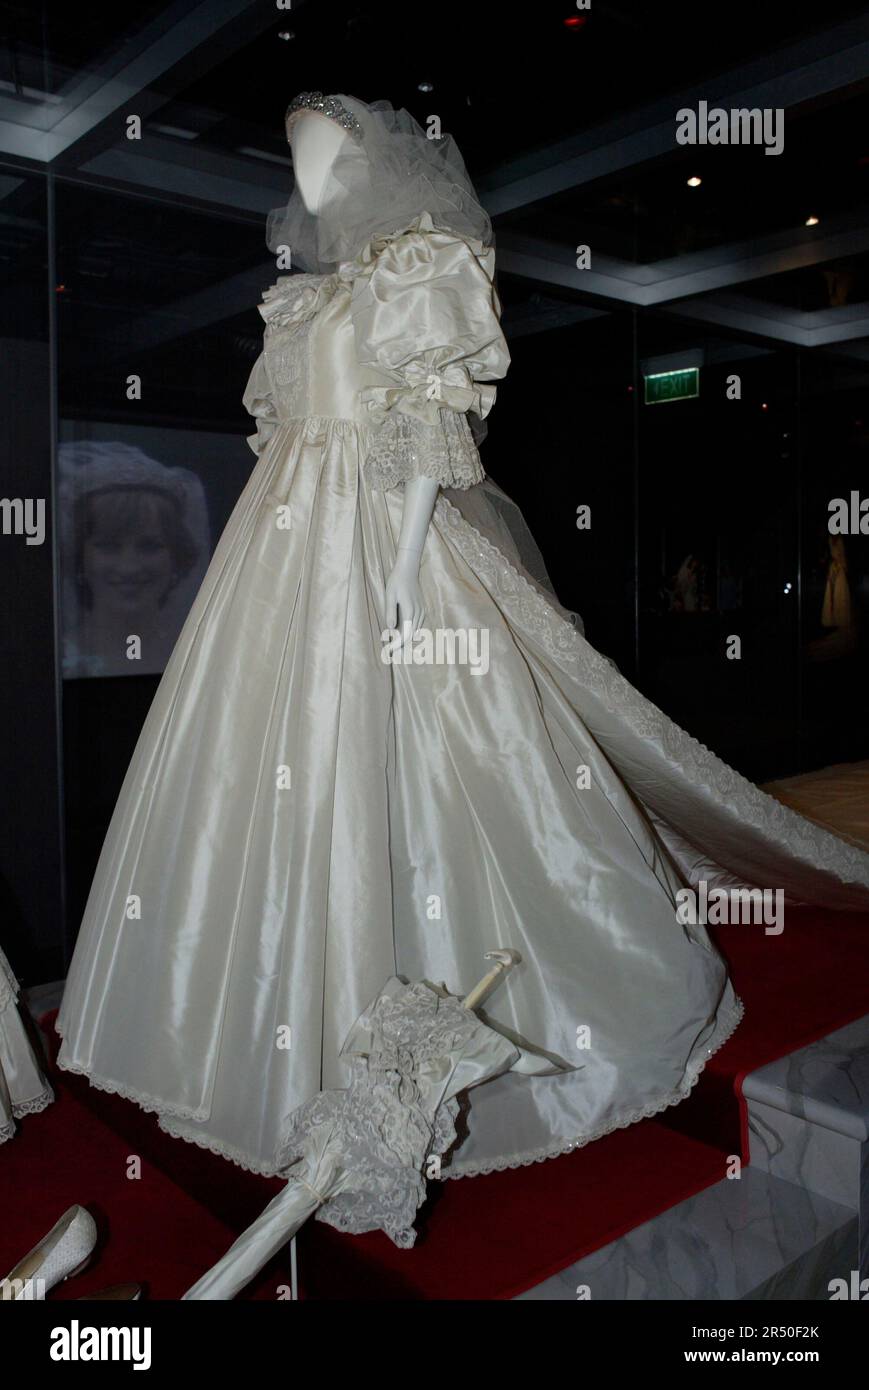 Pin by Ghosn on Diana | Princess diana wedding, Princess diana wedding dress,  Diana wedding